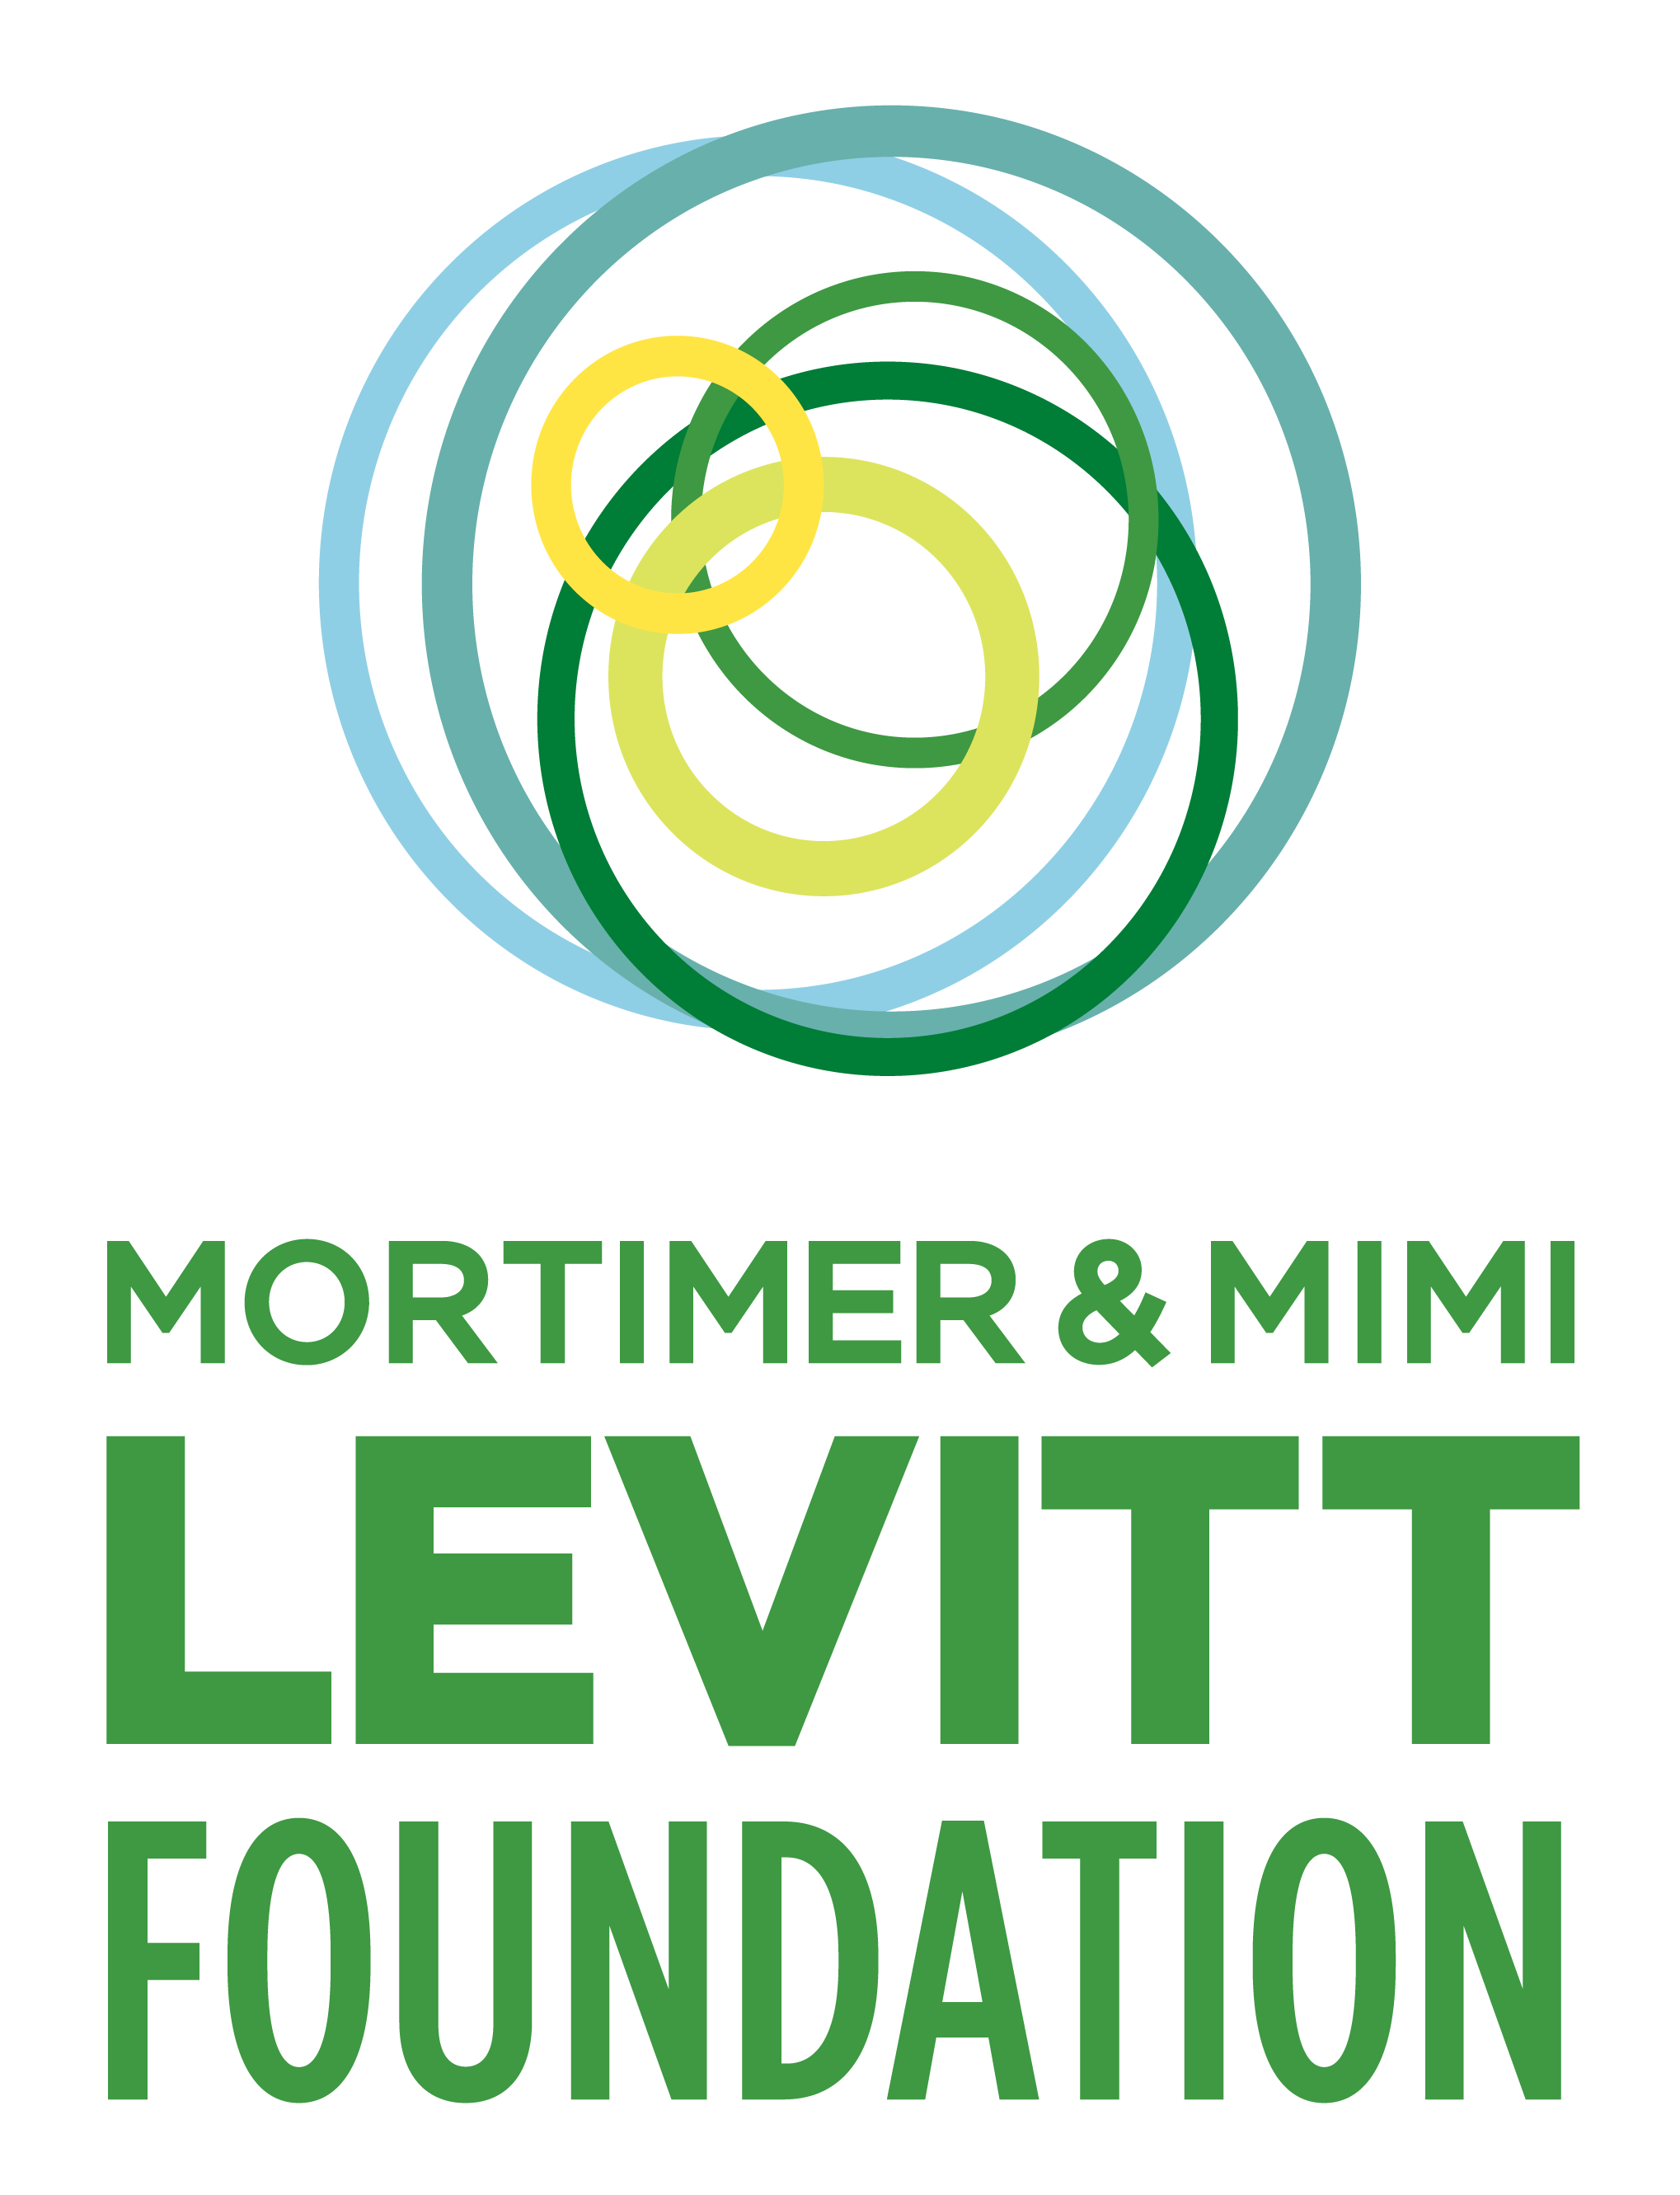 mortimer and mimi, levitt foundation